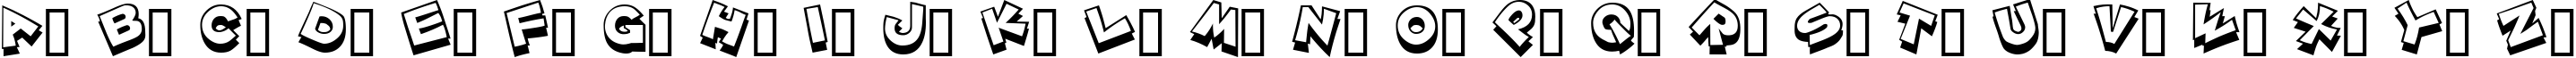 Пример написания английского алфавита шрифтом ZoinkFat